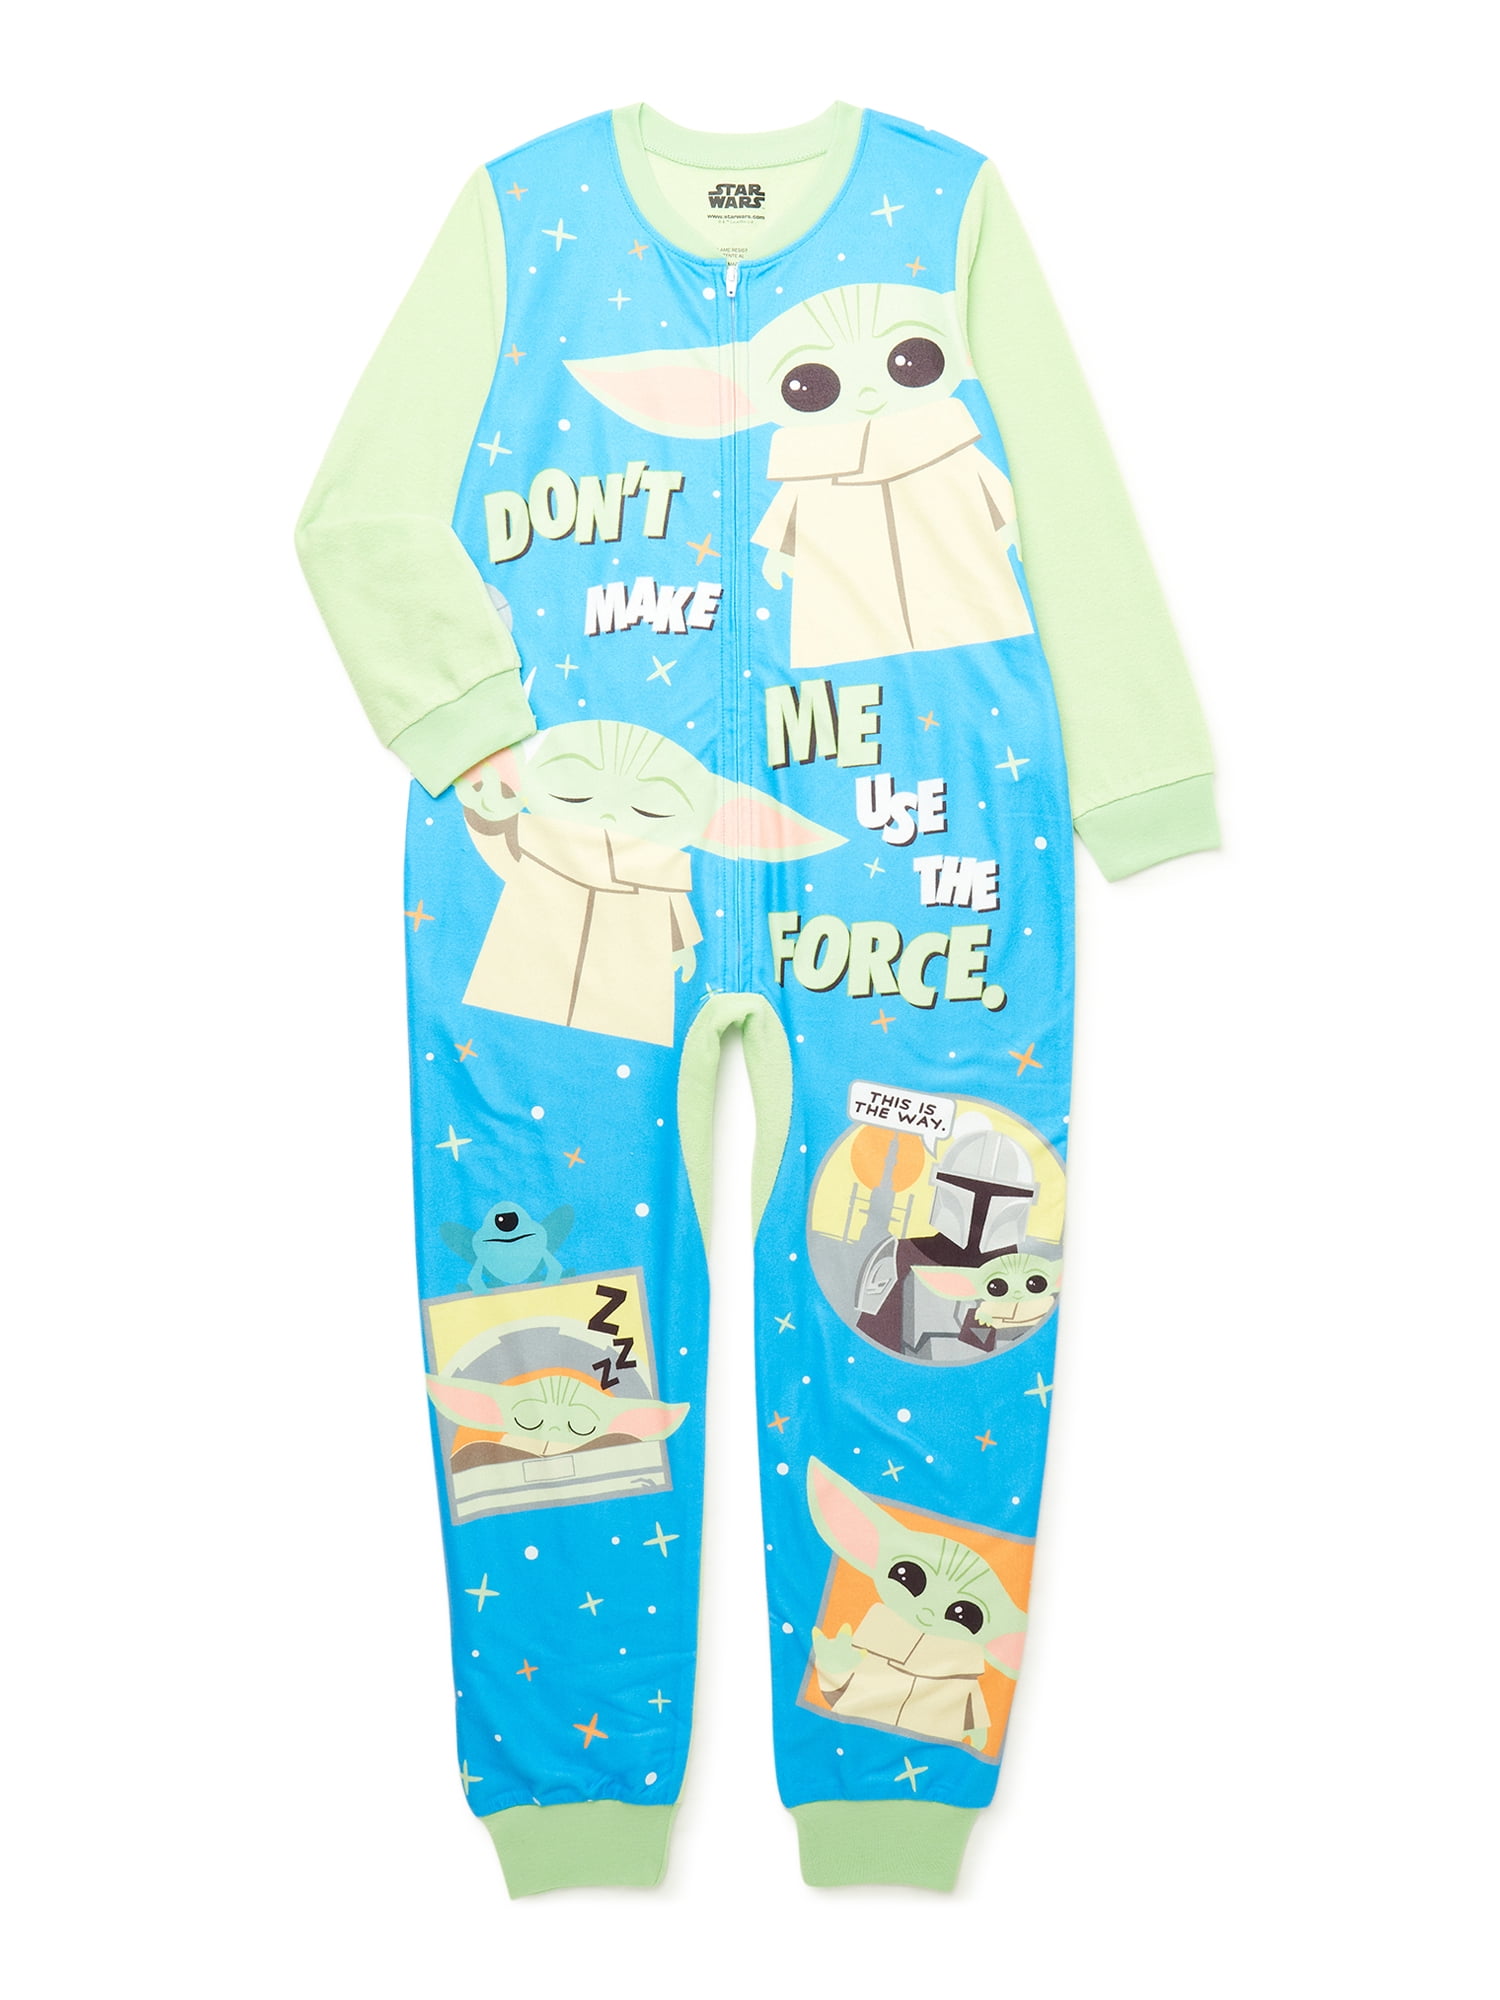 Star Wars YODA Fleece Pajamas Union Suit One Piece Pjs  S M L XL Unisex 